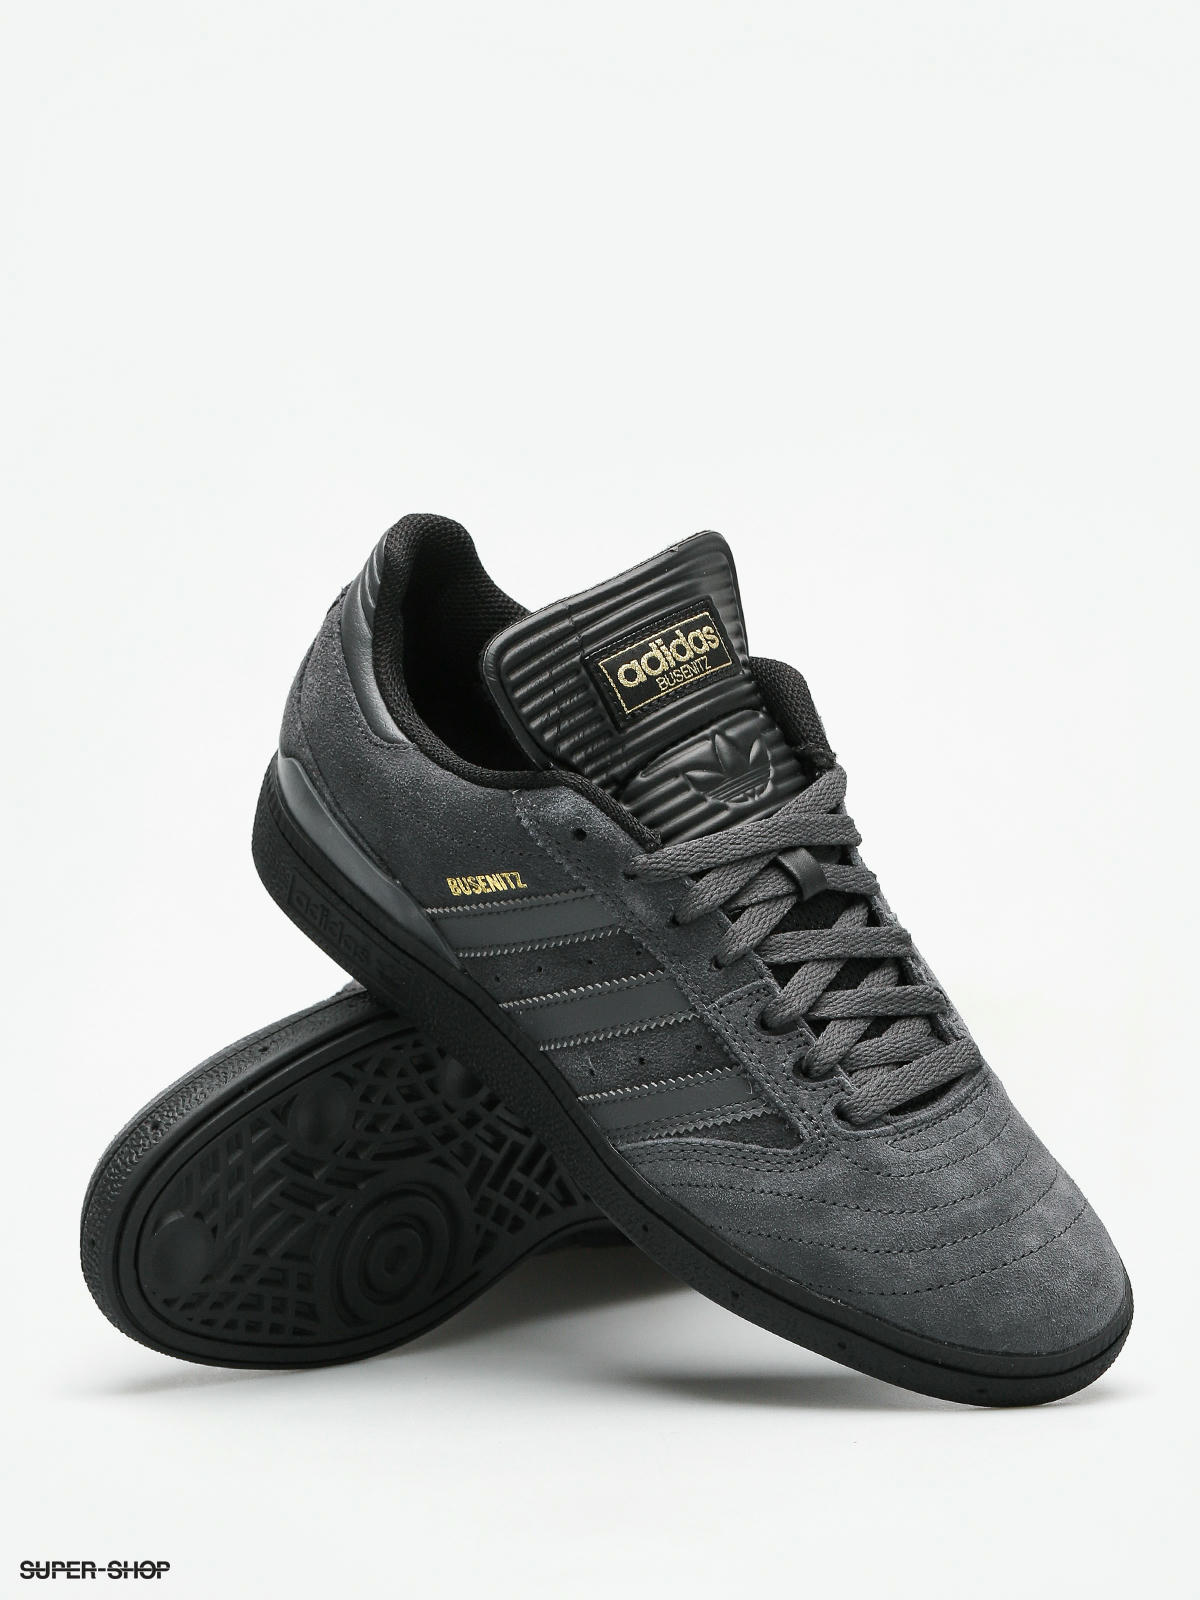 adidas busenitz pro shoes grey black gold